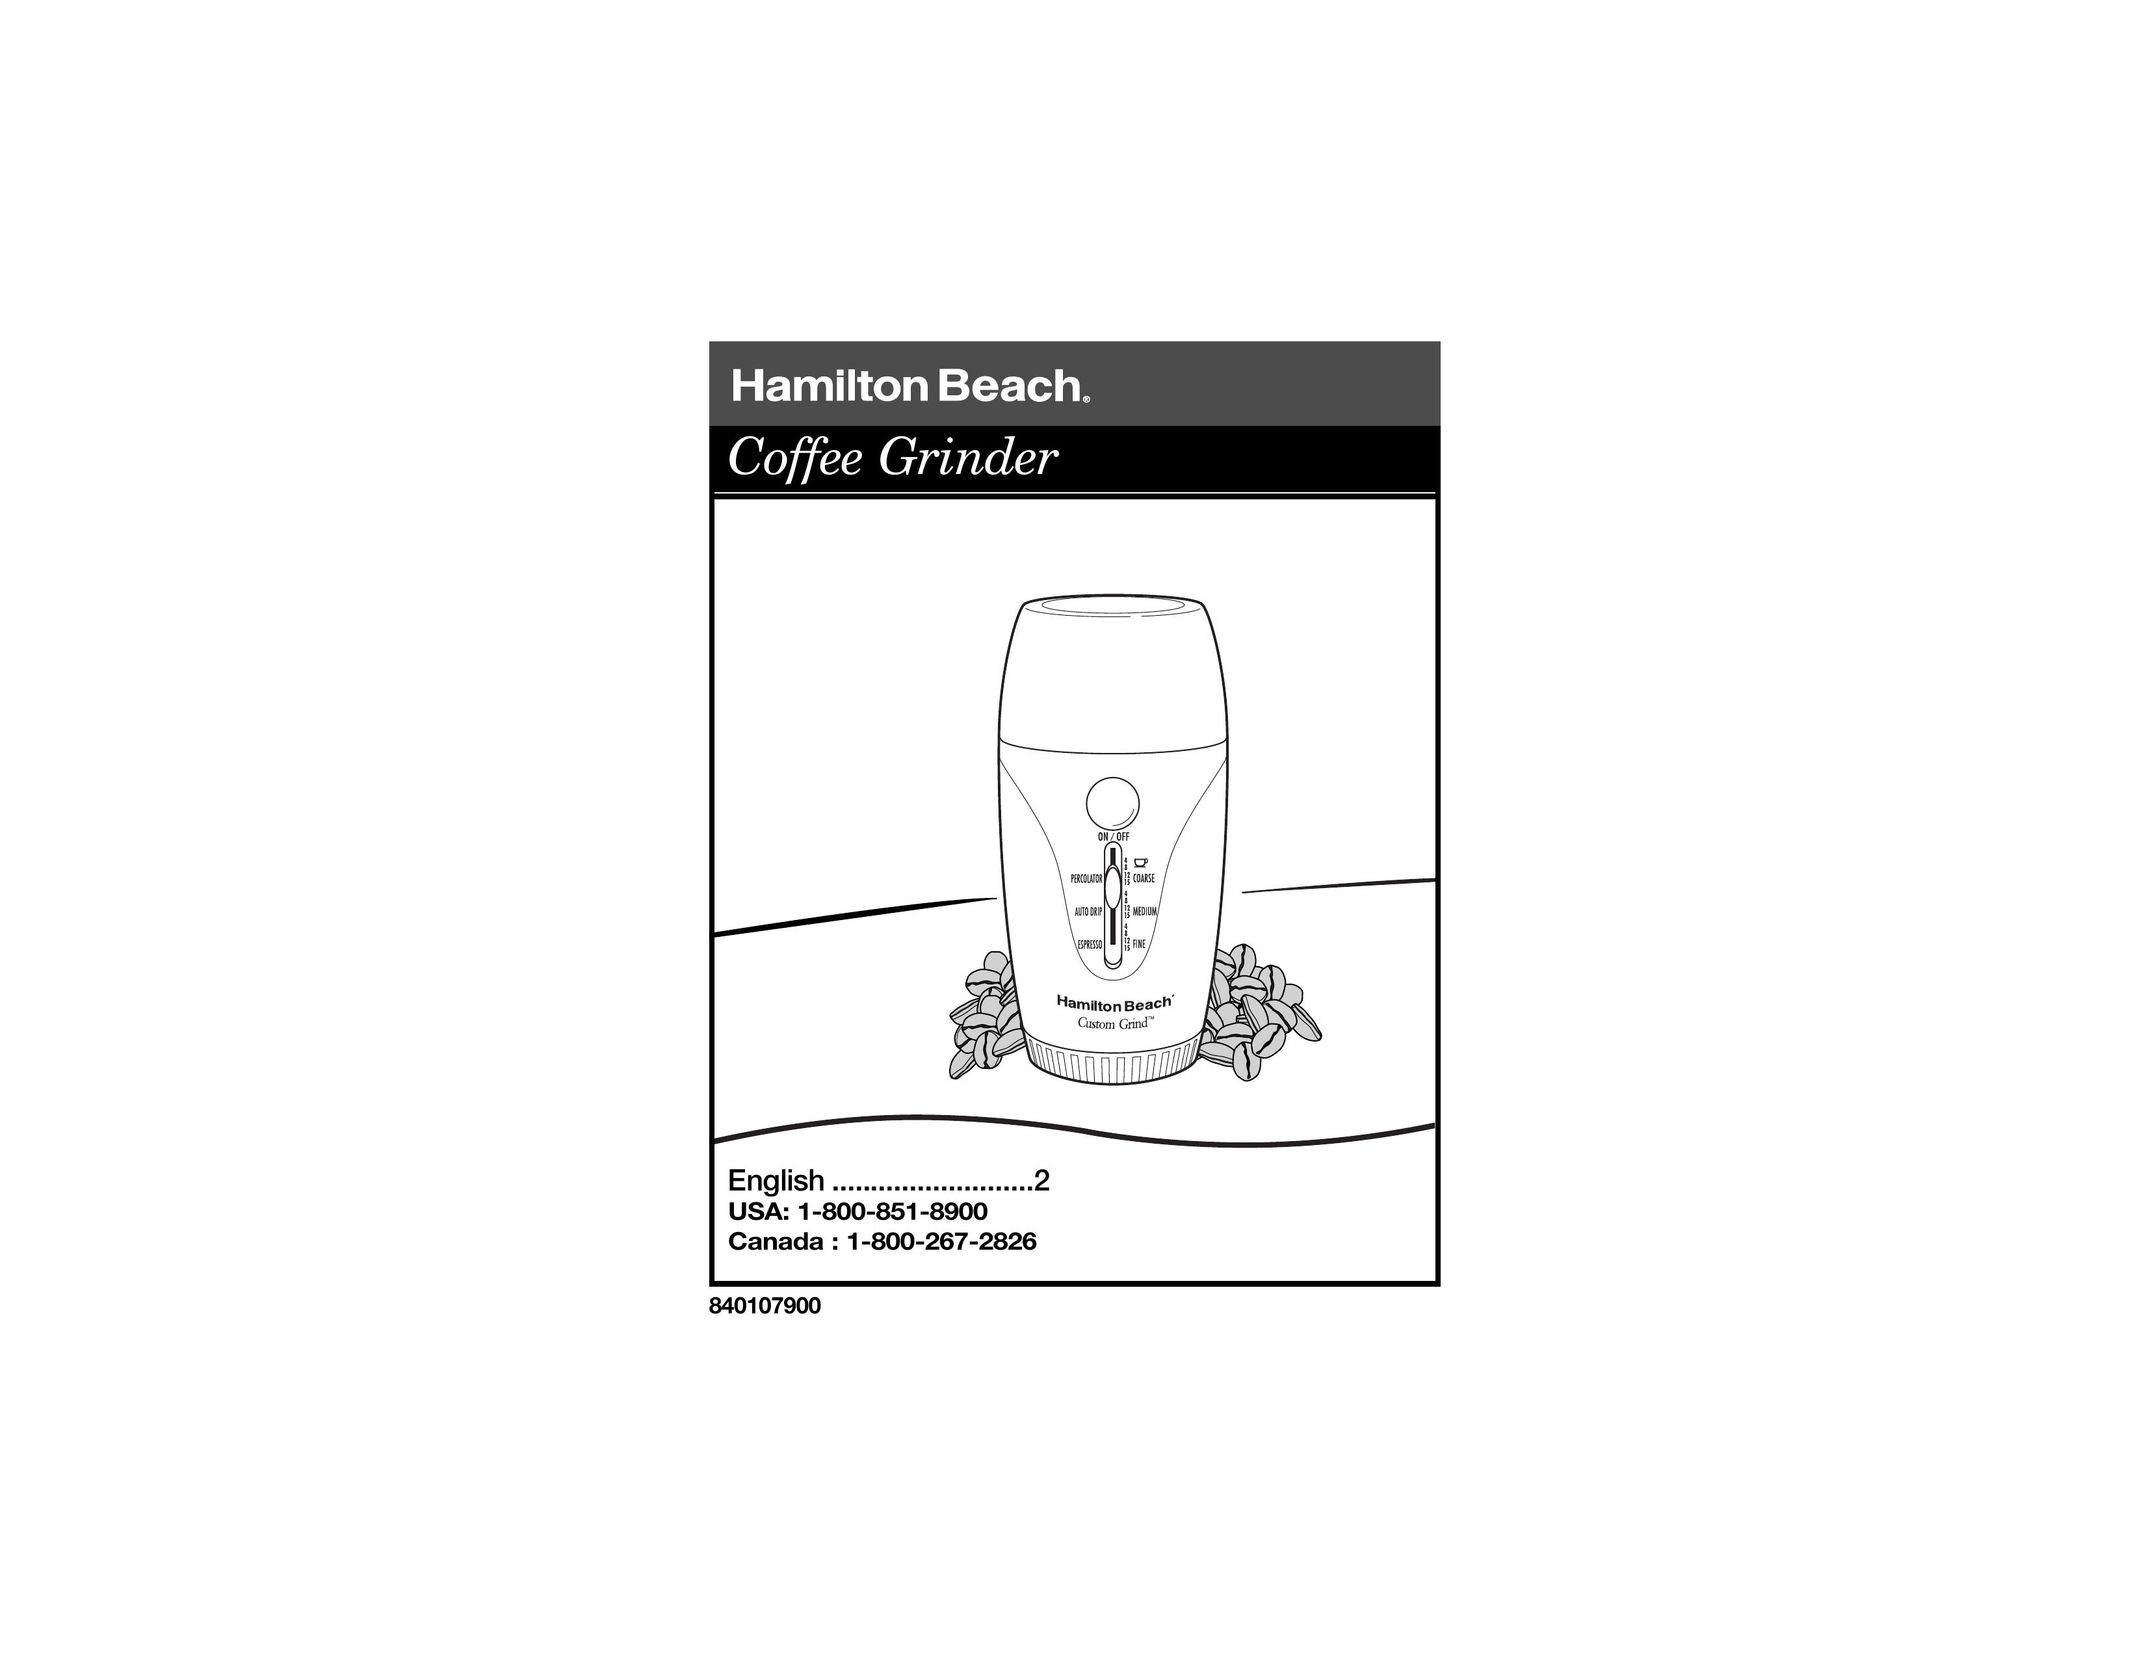 Hamilton Beach 840107900 Coffee Grinder User Manual